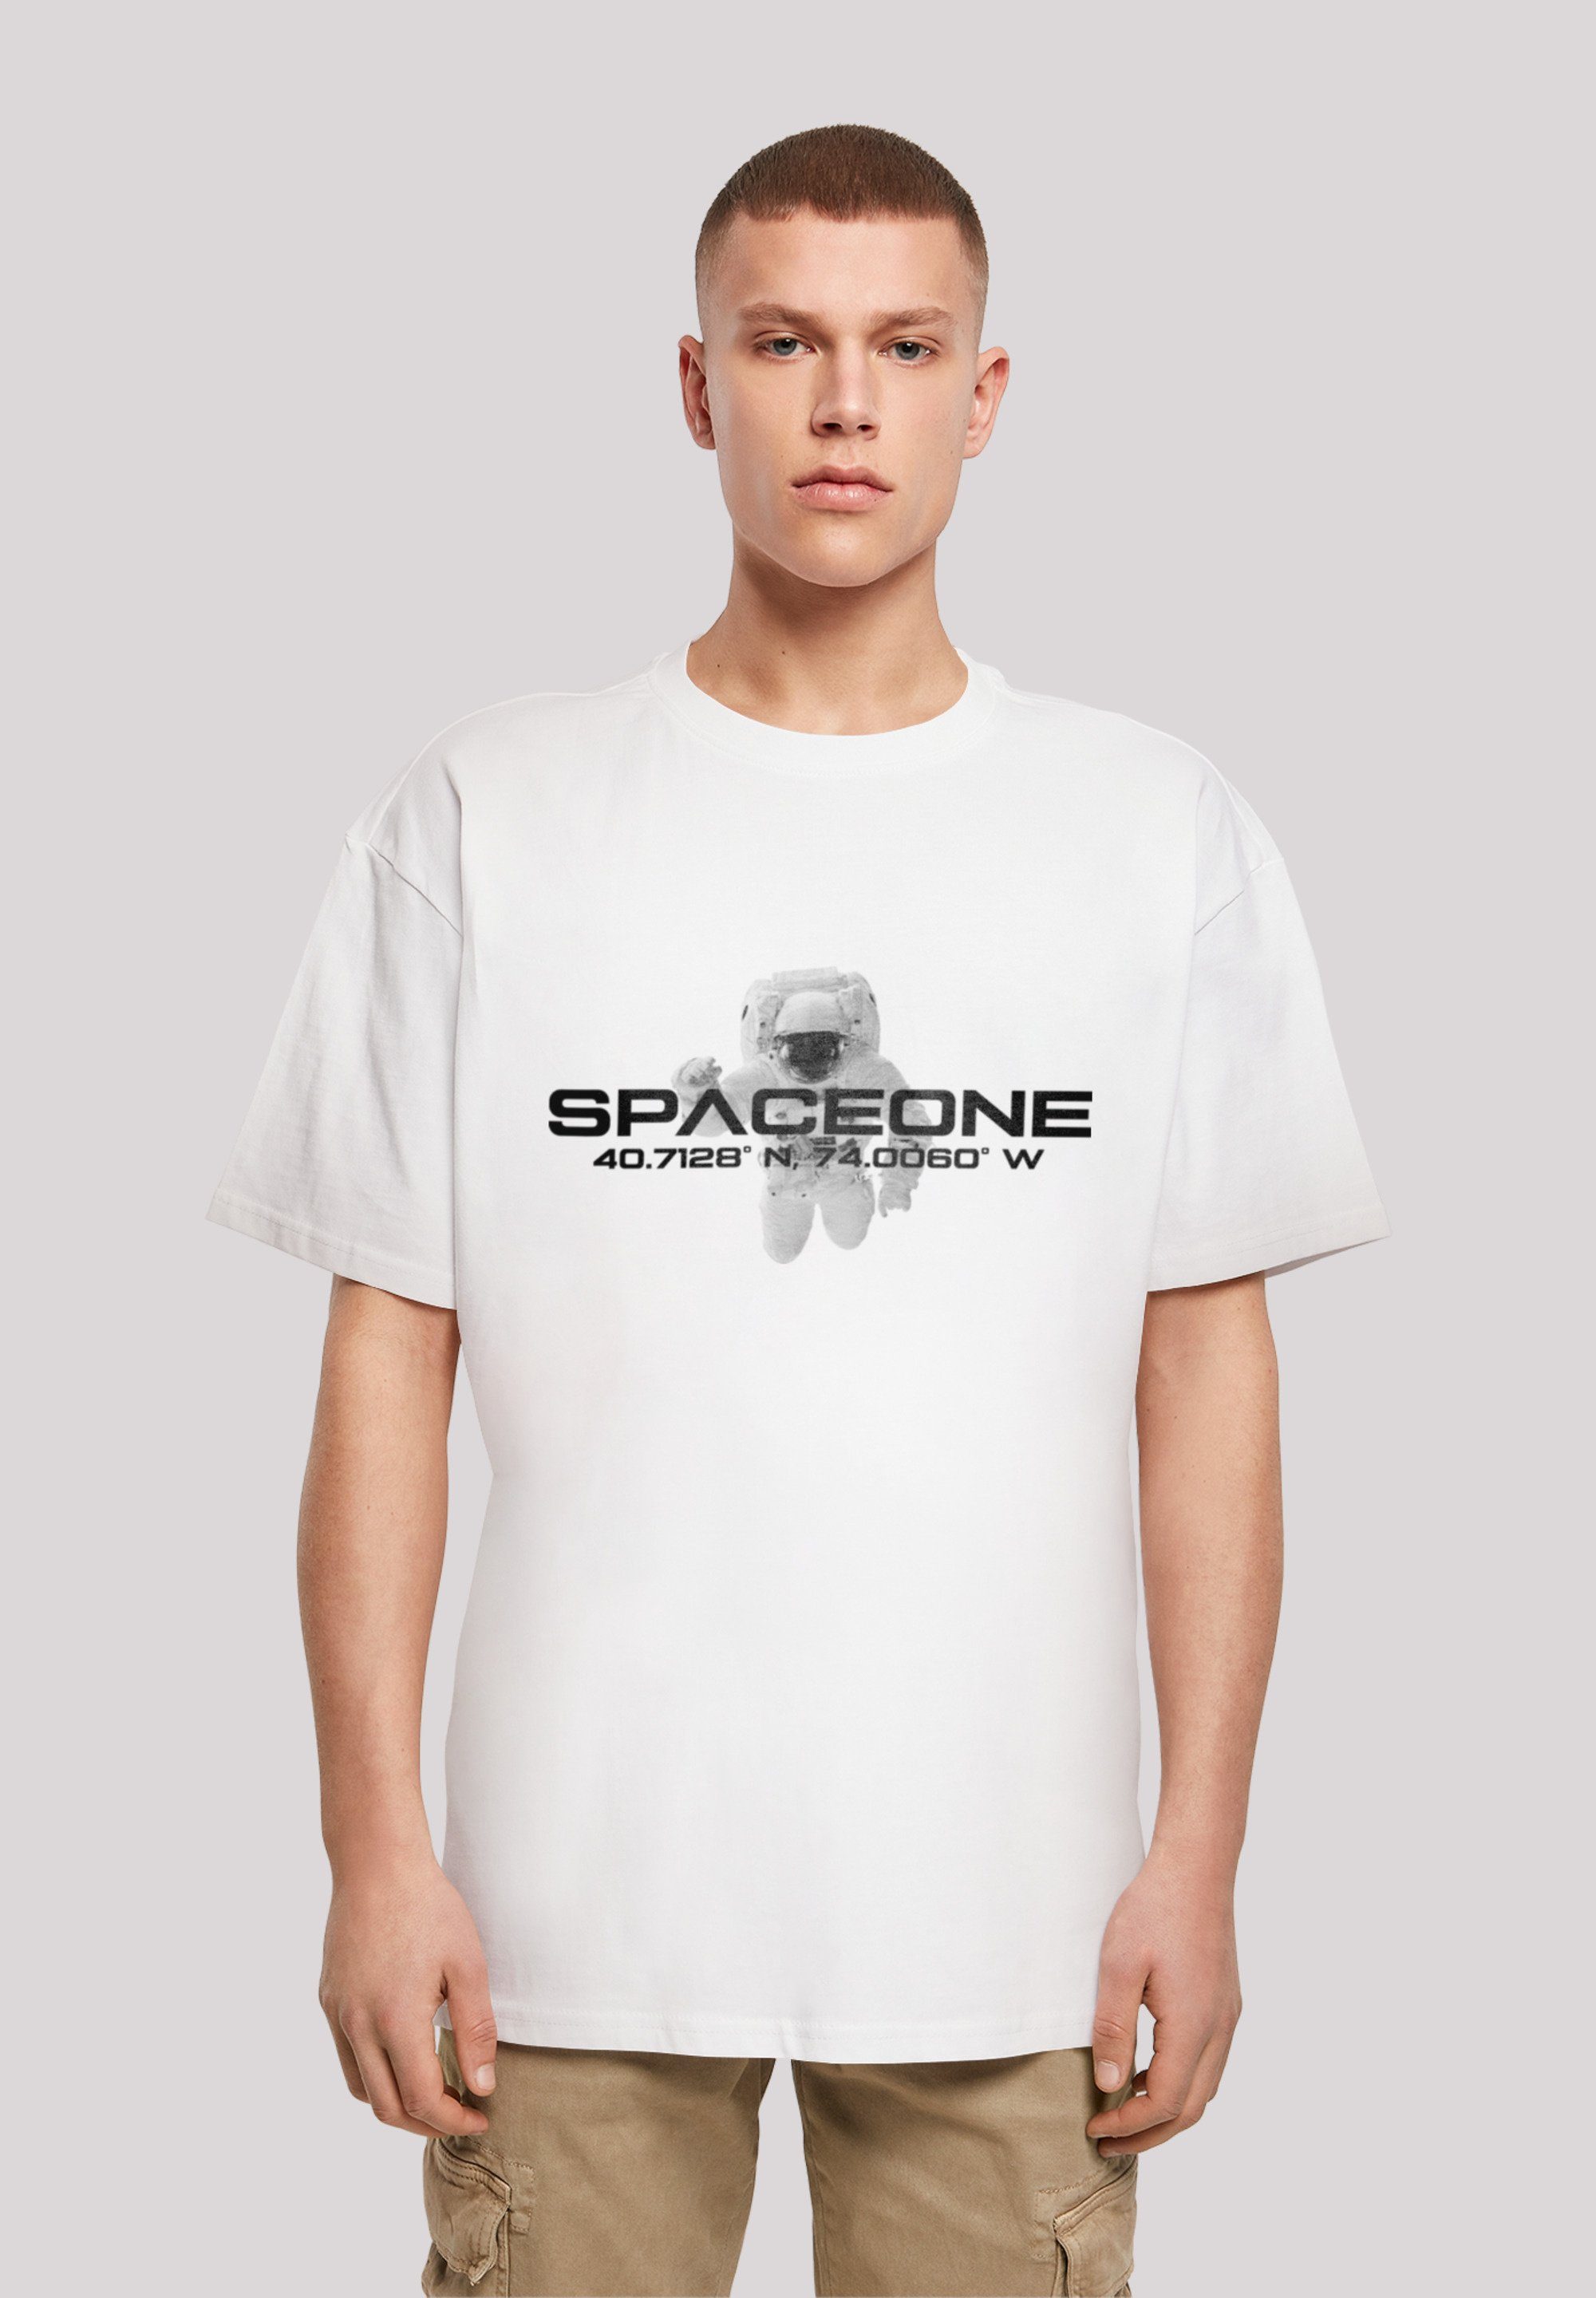 PHIBER F4NT4STIC weiß T-Shirt Print SpaceOne Astronaut